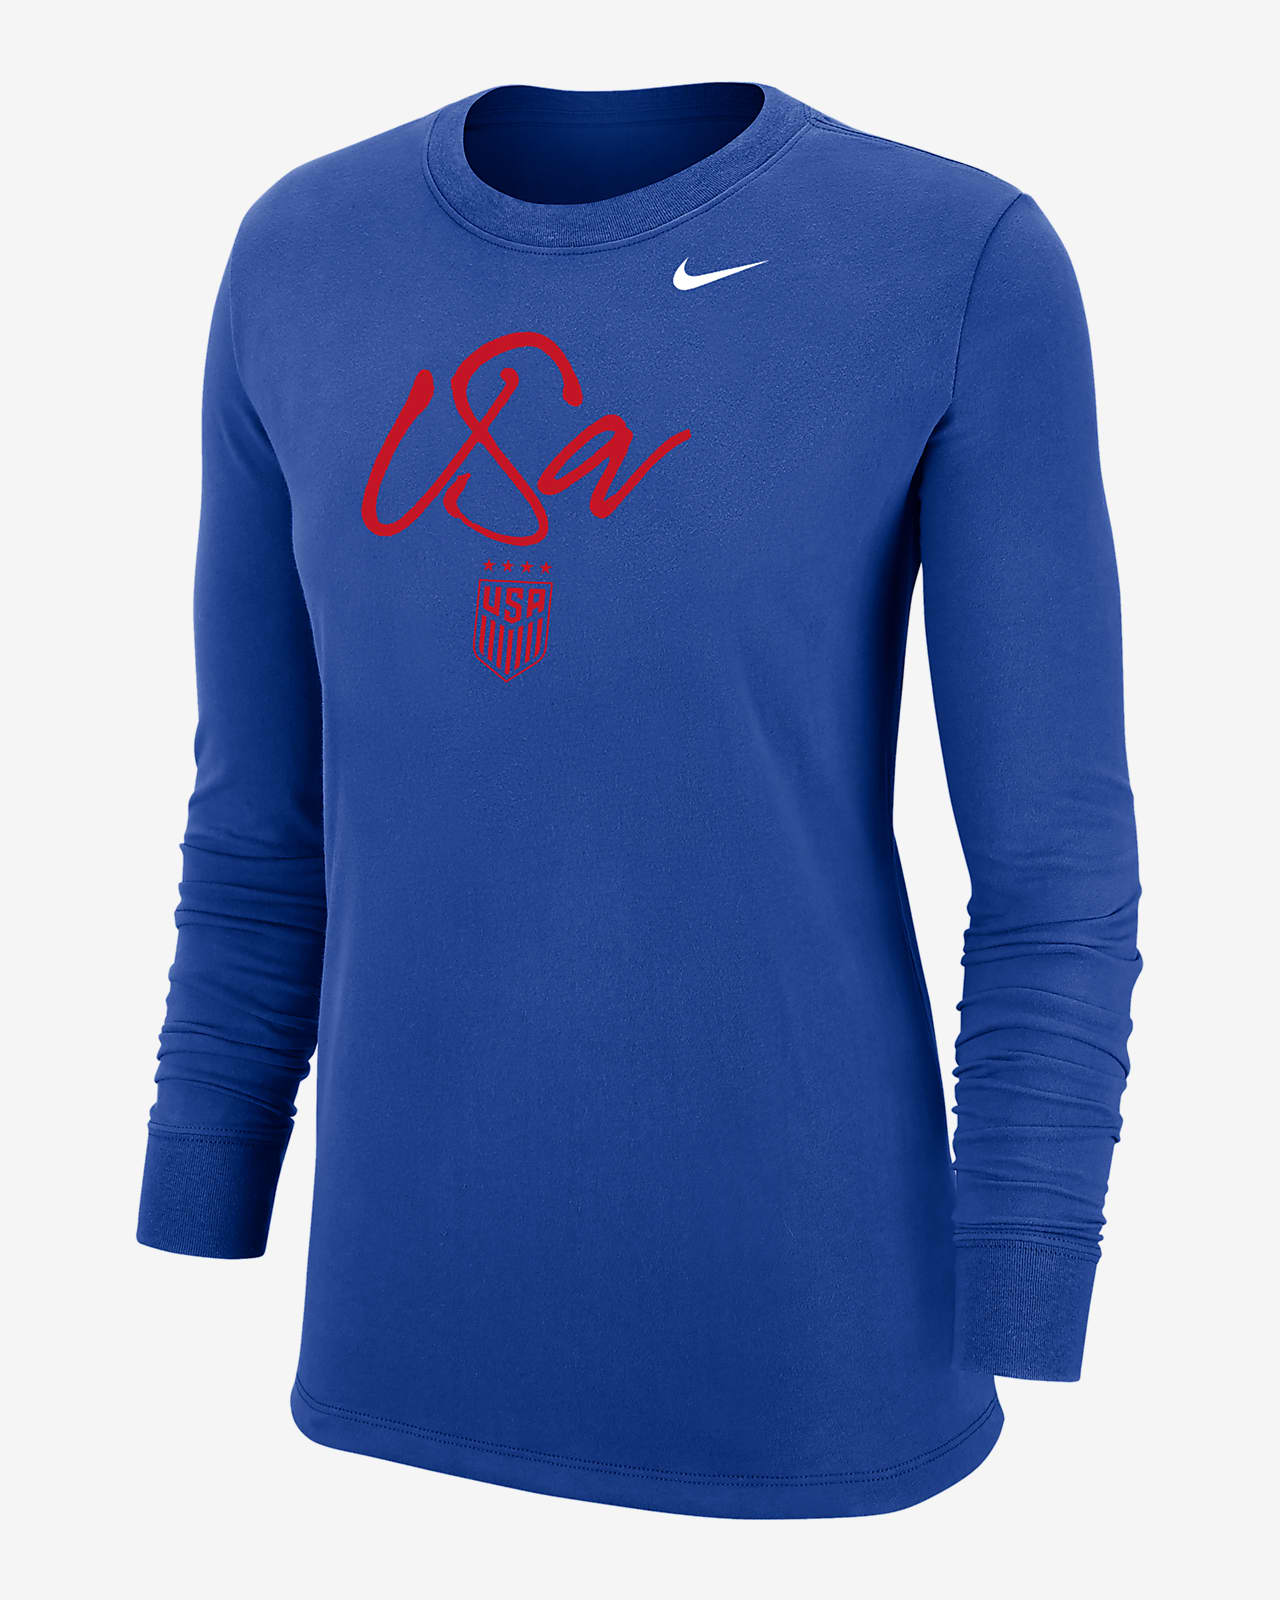 USWNT Women's Nike Soccer Long-Sleeve T-Shirt